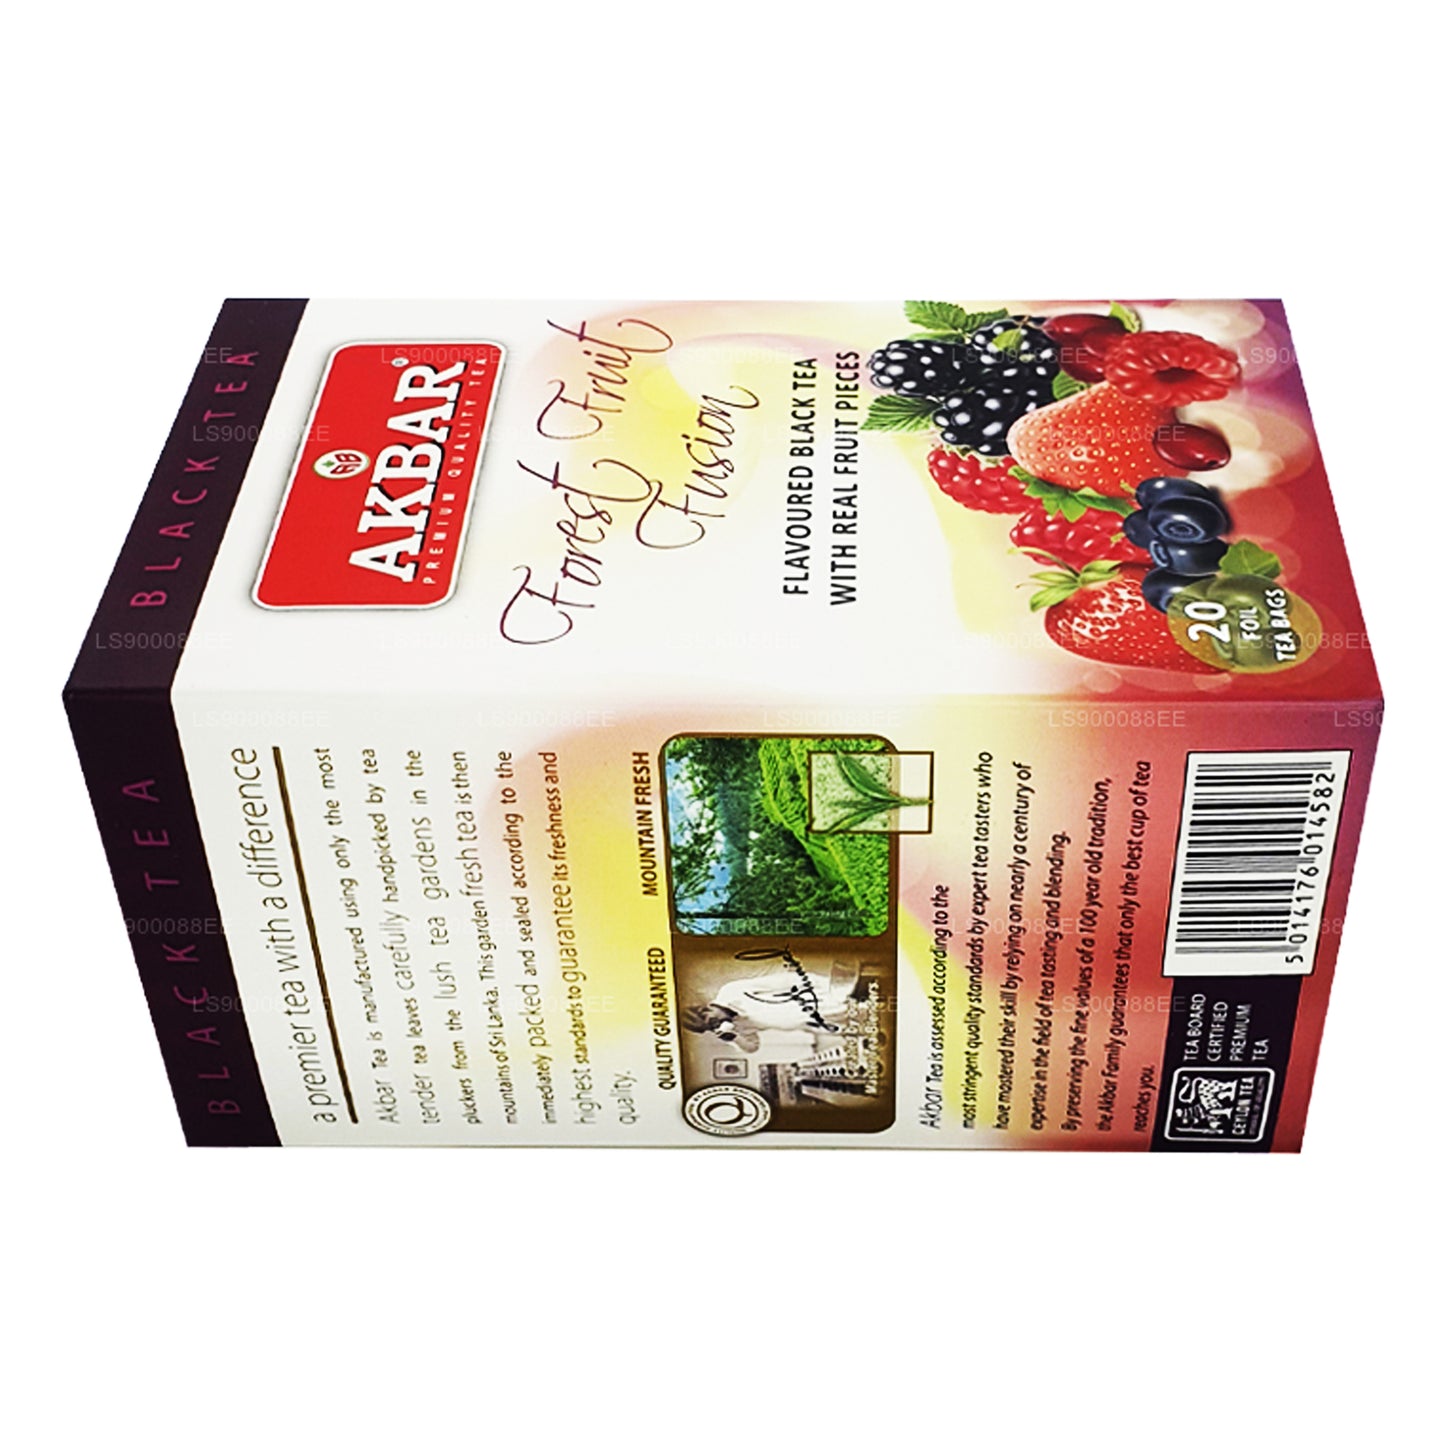 Akbar Forest Fruit Fusion (40g) 20 Tea Bags